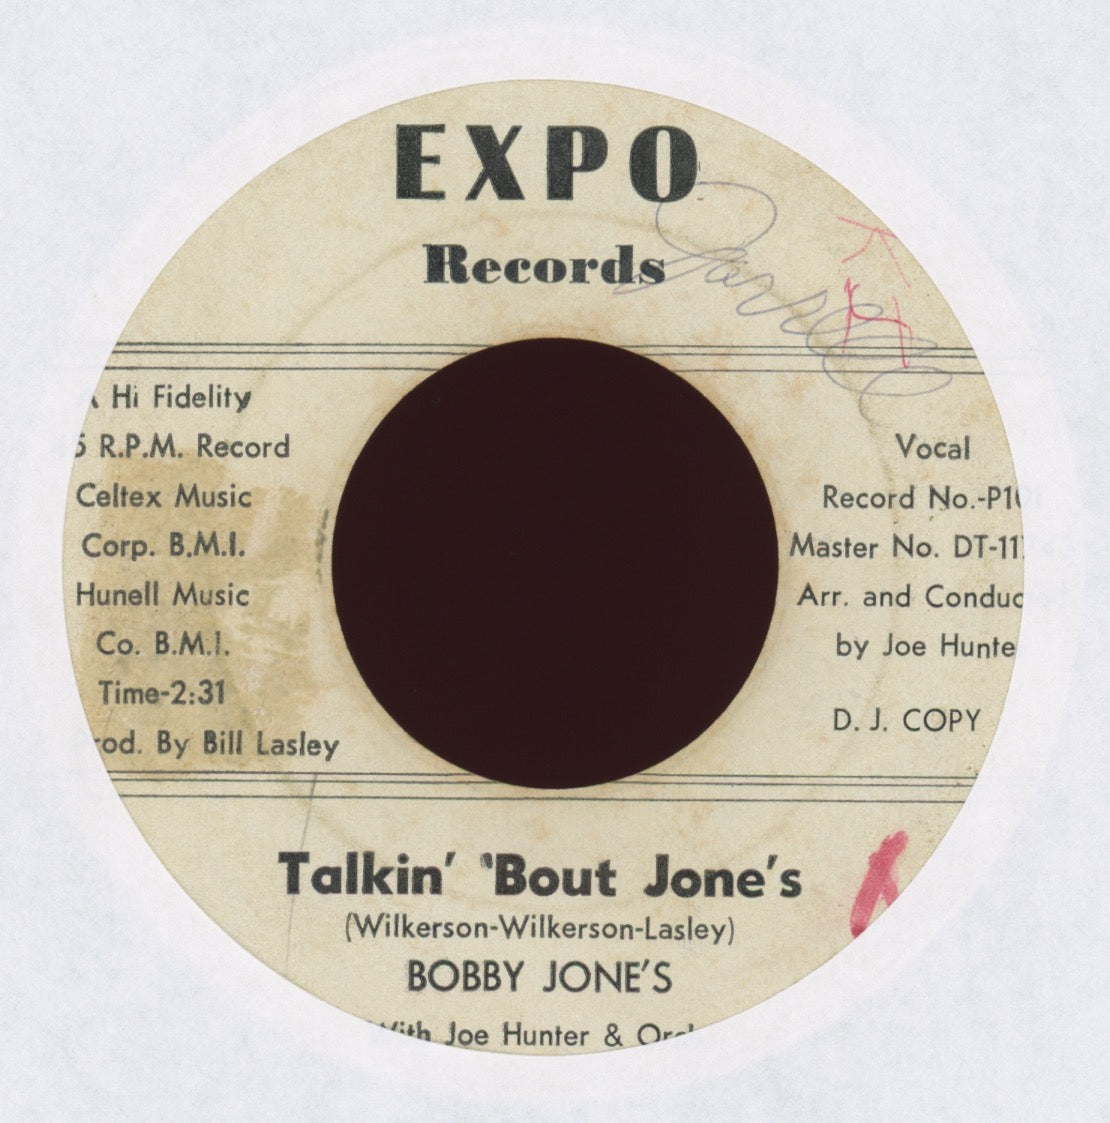 Bobby Jones - Talkin' 'Bout Jone's on Expo Promo